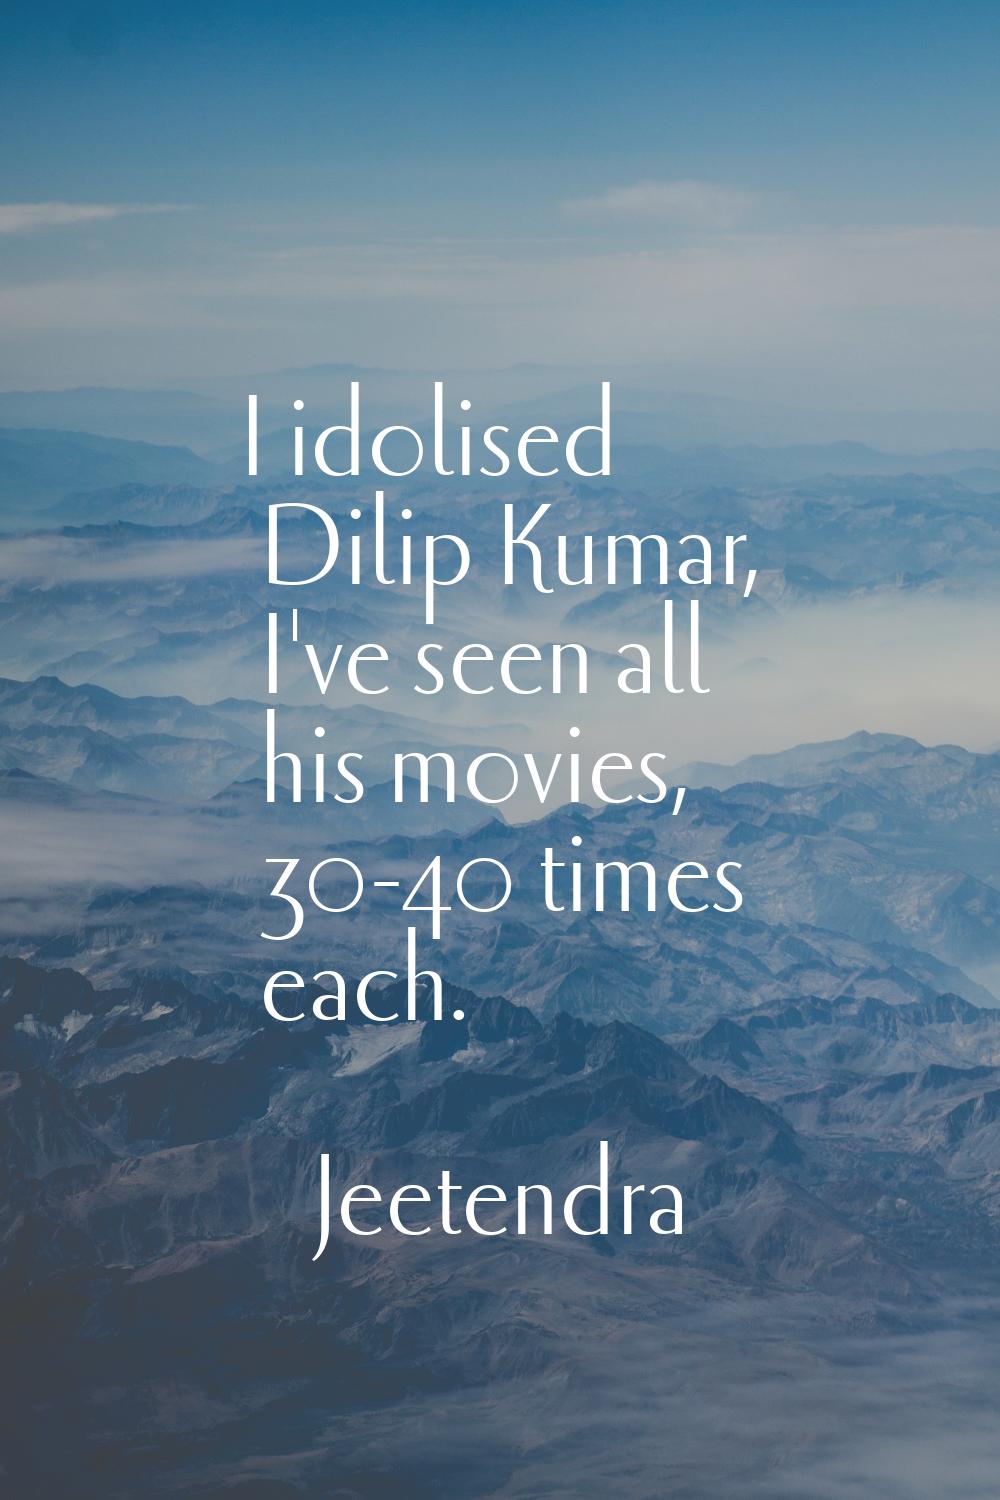 I idolised Dilip Kumar, I've seen all his movies, 30-40 times each.